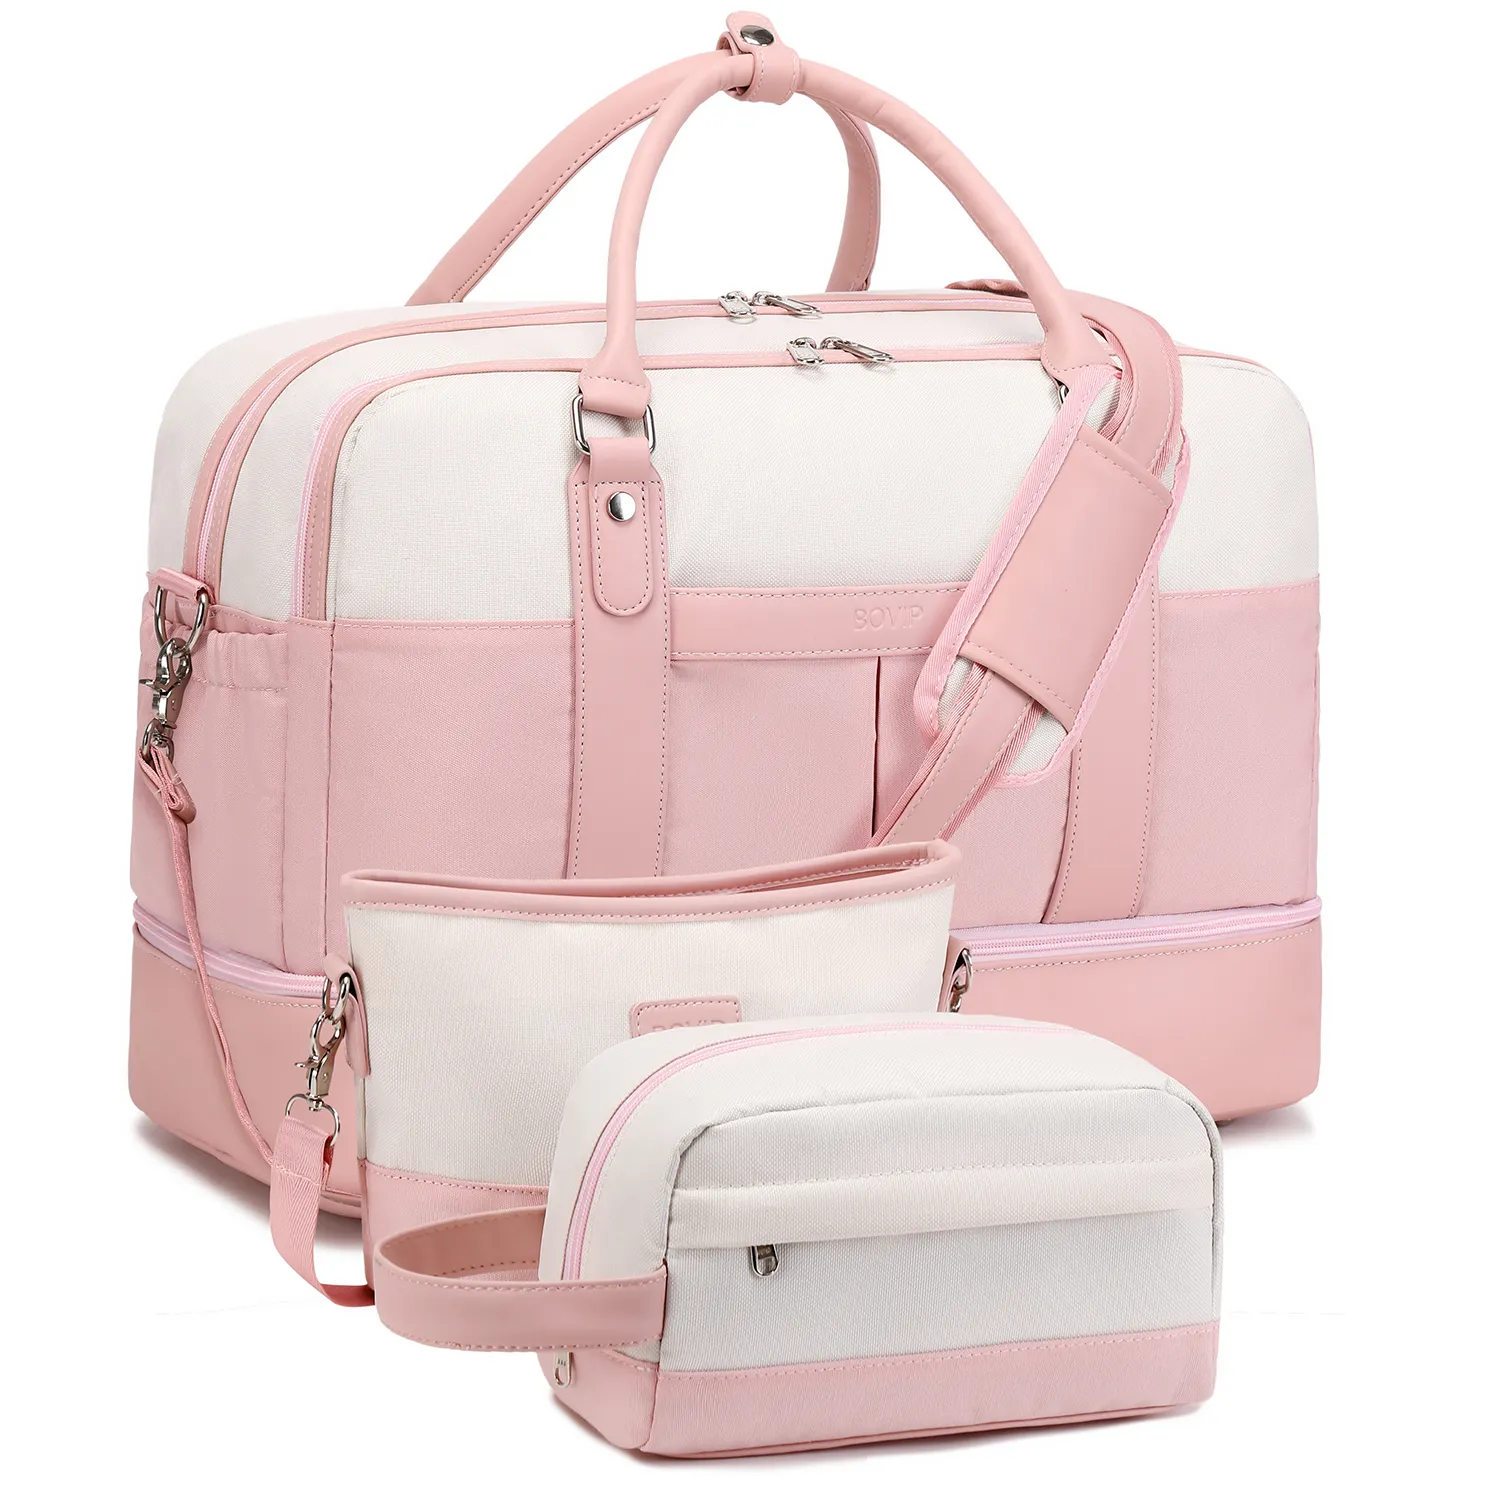 Nerlion In Stock Pink White Canvas Weekender 3 Sets Backpack Bag Travel Large Capacity Gym Bags Men Women Unisex Duffel Bag